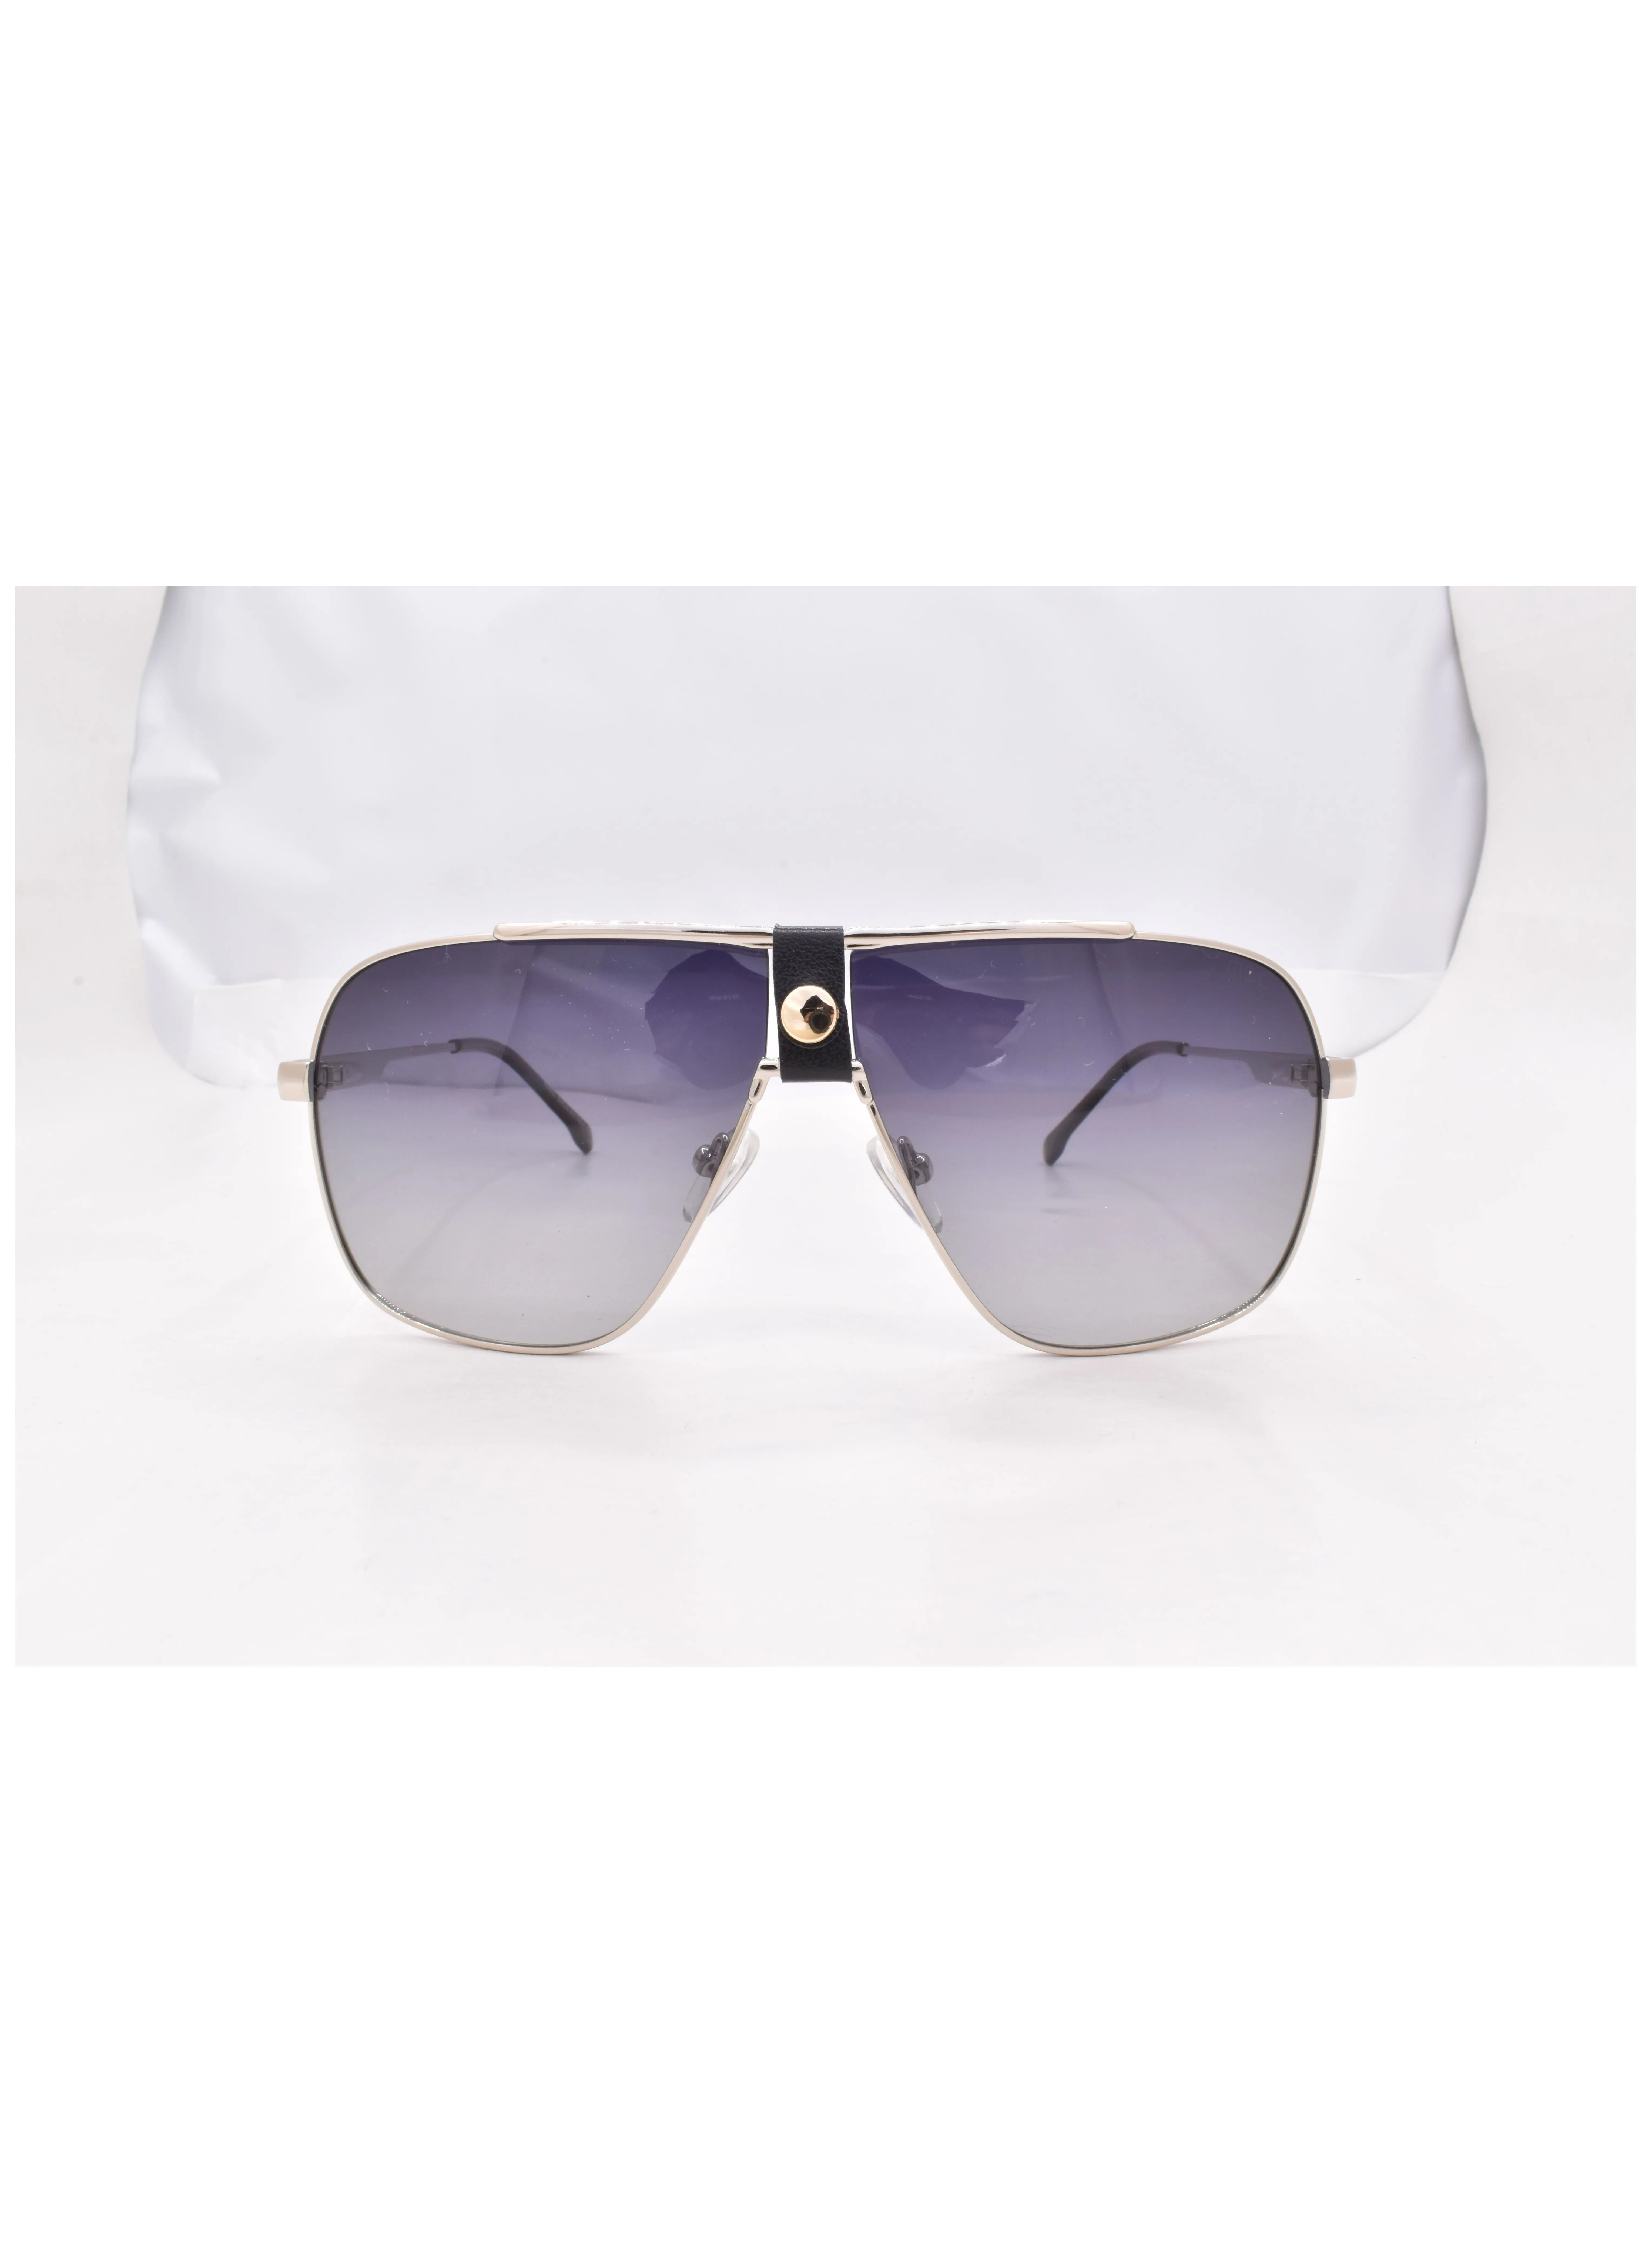 MEC Oversized Sunglasses With Leather On Bridge 39975-C3